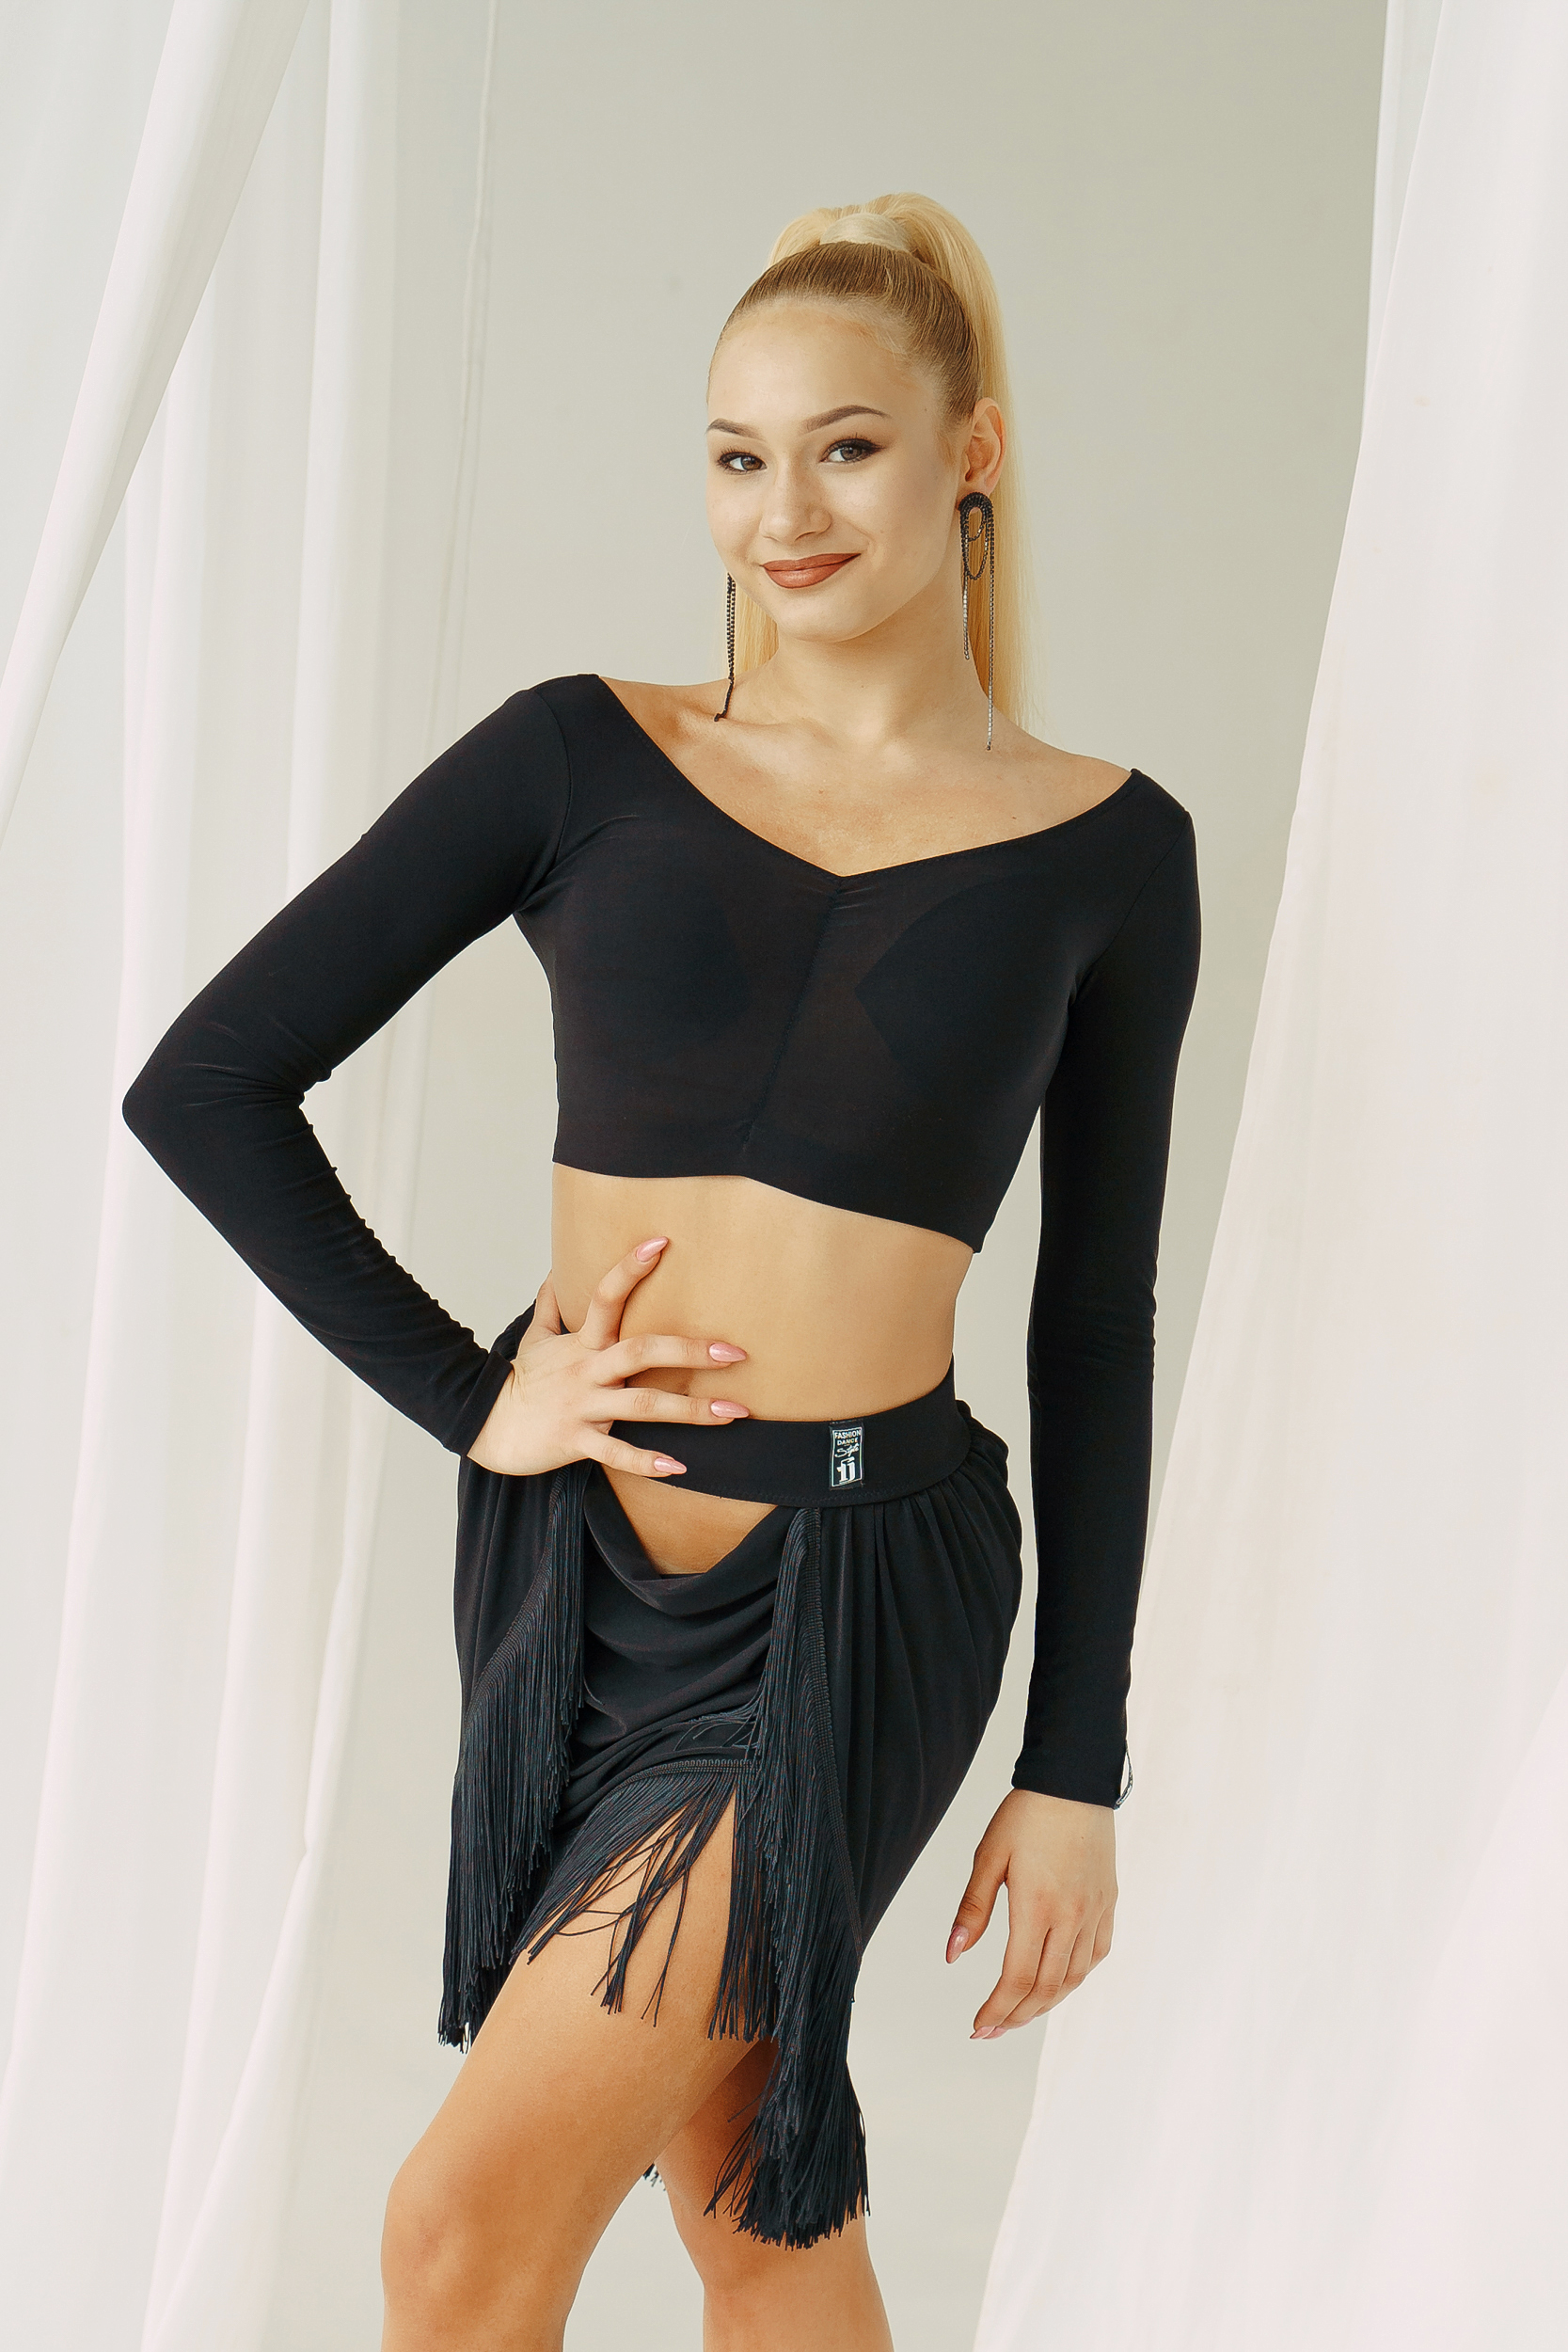 Spódnica treningowa model Jenna 037 marki Fashion Dance